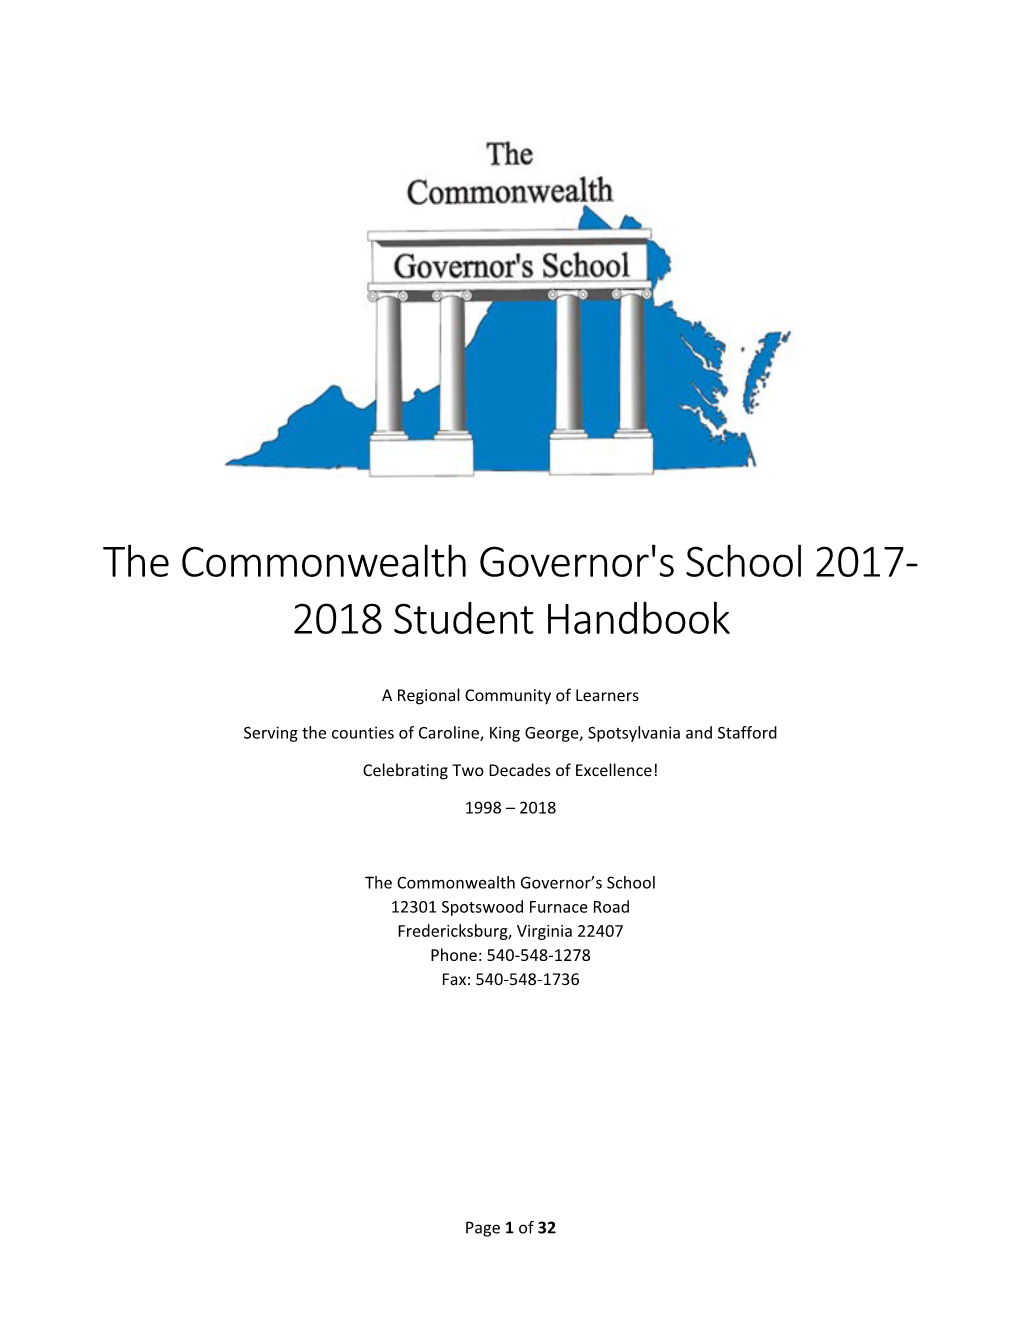 Commonwealth Governor's School Student Handbook